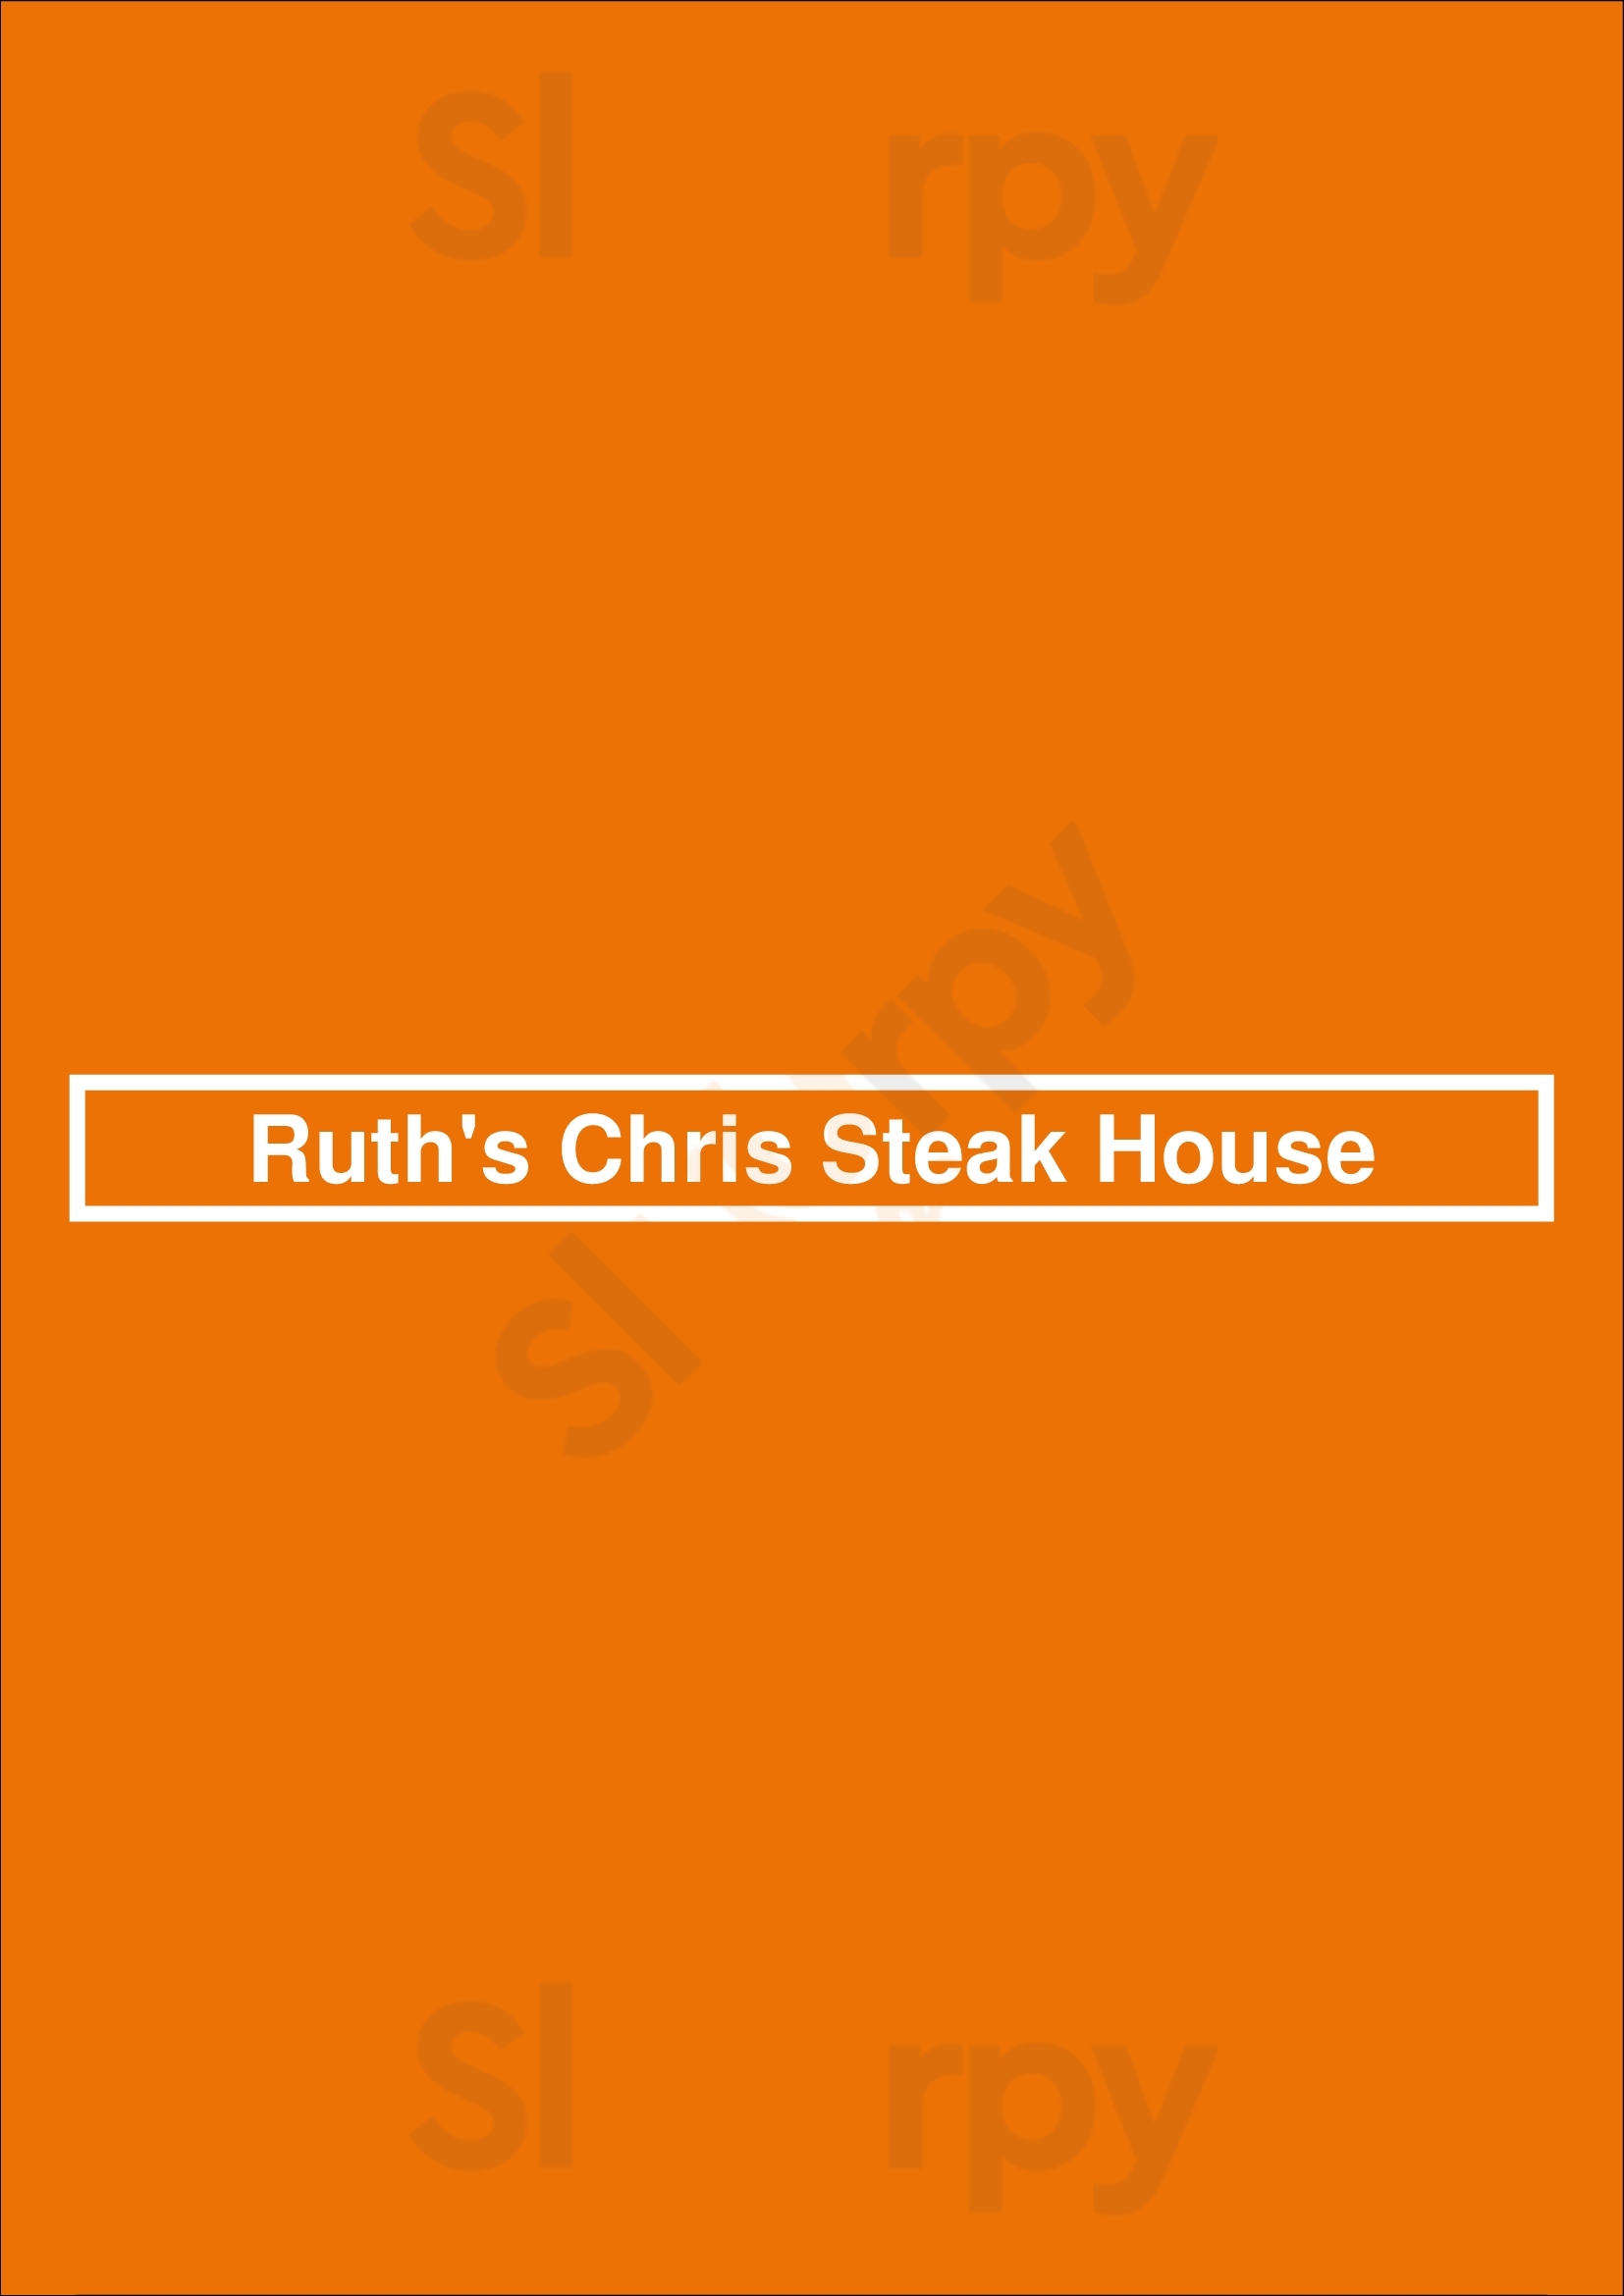 Ruth's Chris Steak House Baltimore Menu - 1